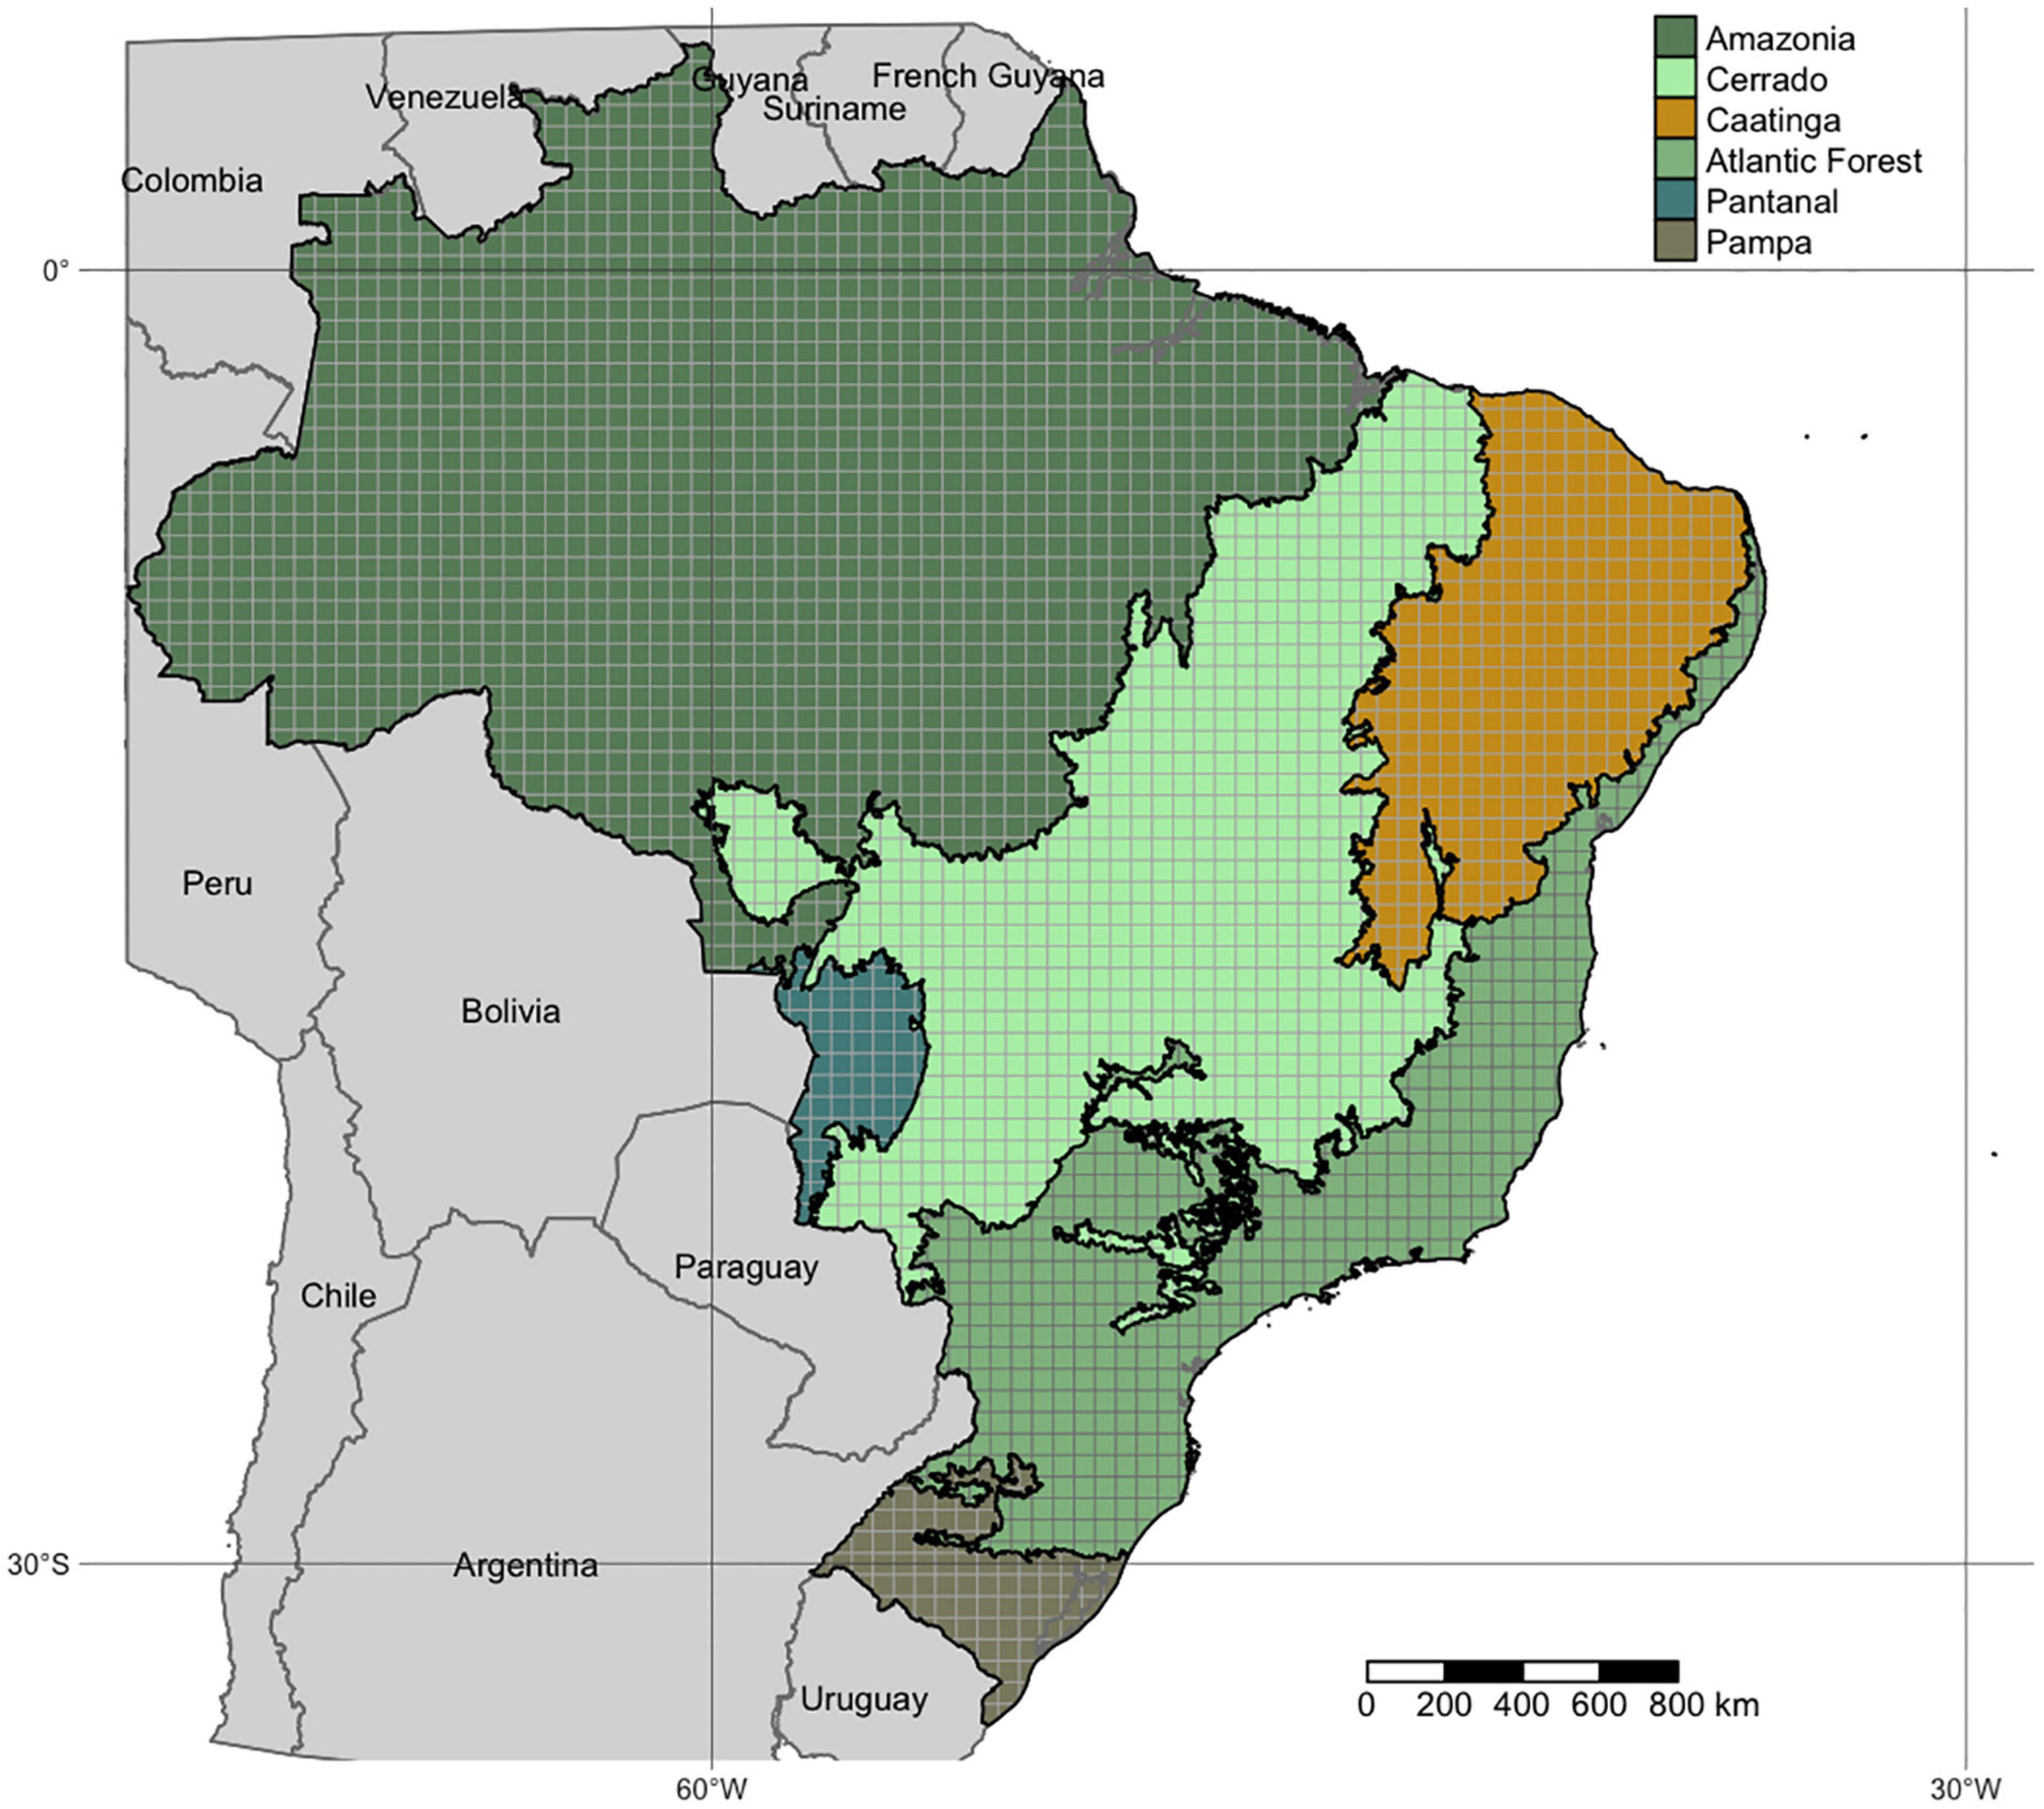 Atlas of Brazilian Snakes: Verified Point-Locality Maps to